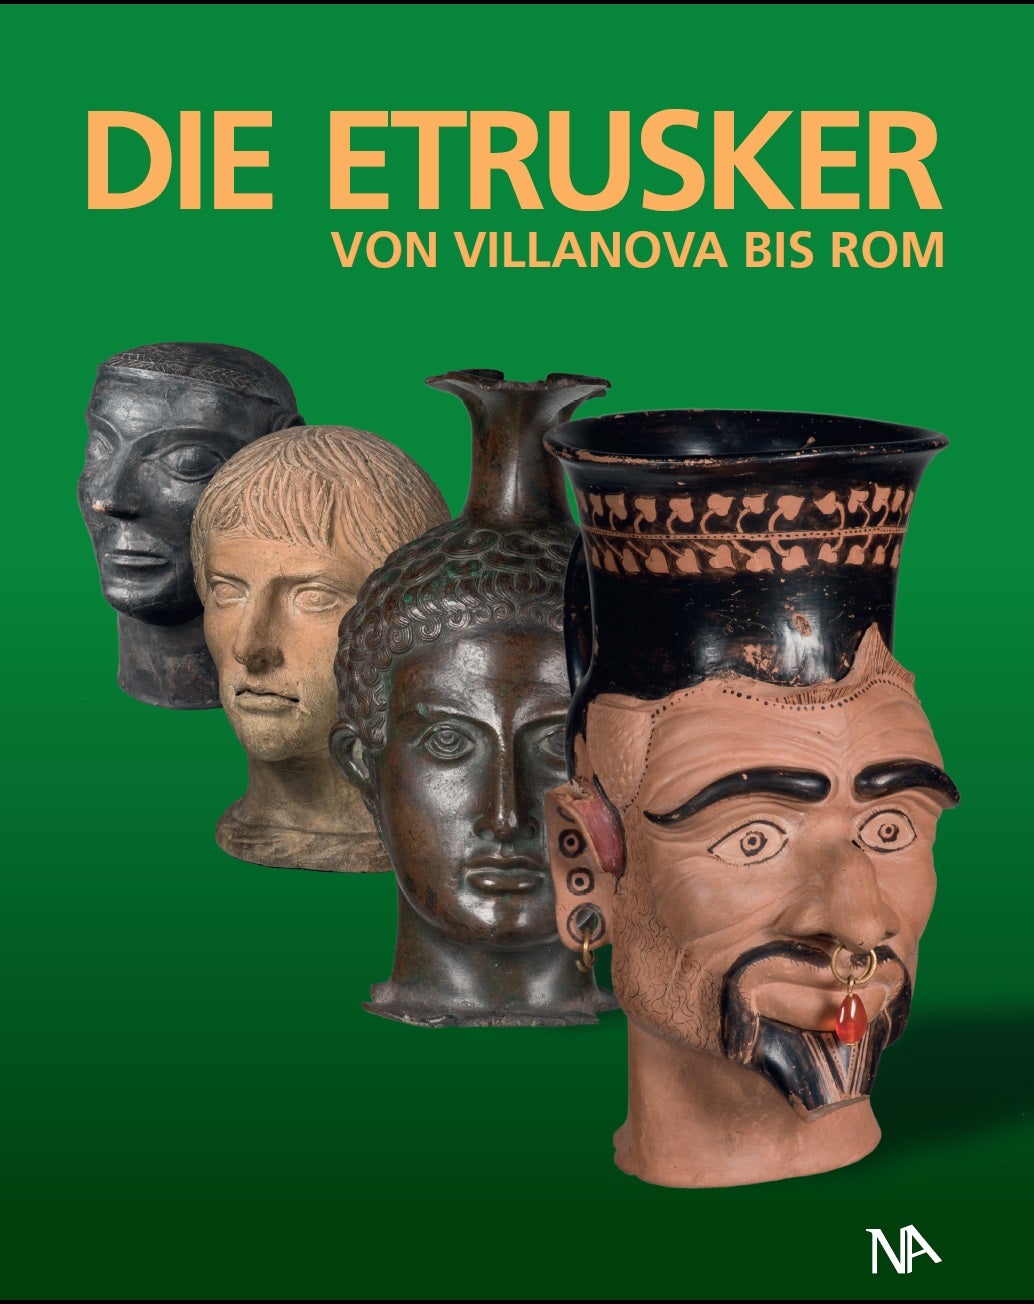 Die Etrusker